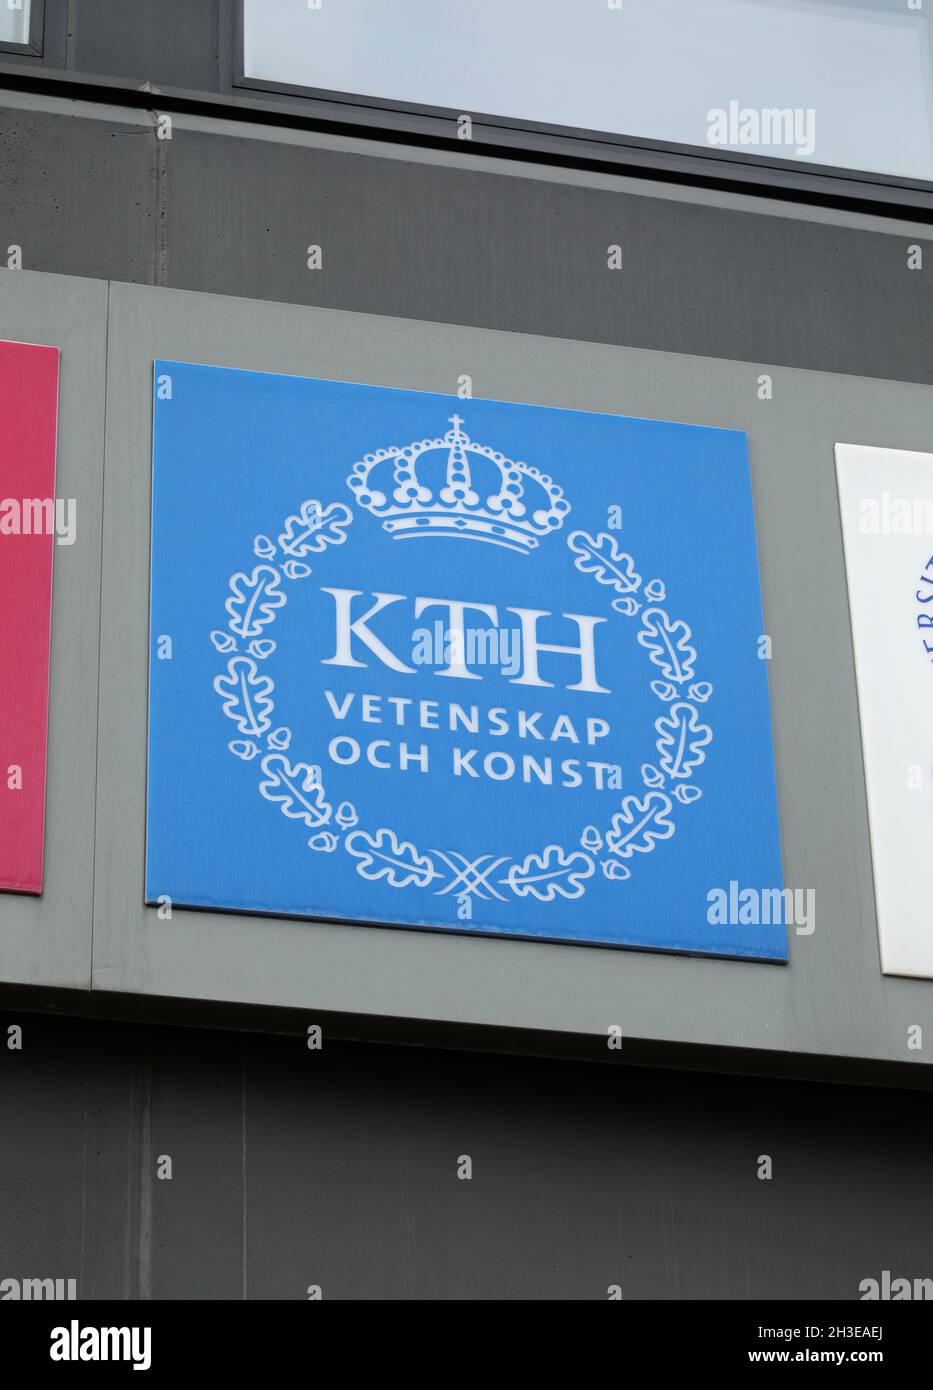 Signs at Campus Solna in Solna, Stockholm, Sweden. In the picture: KTH Vetenskap och konst. Stock Photo